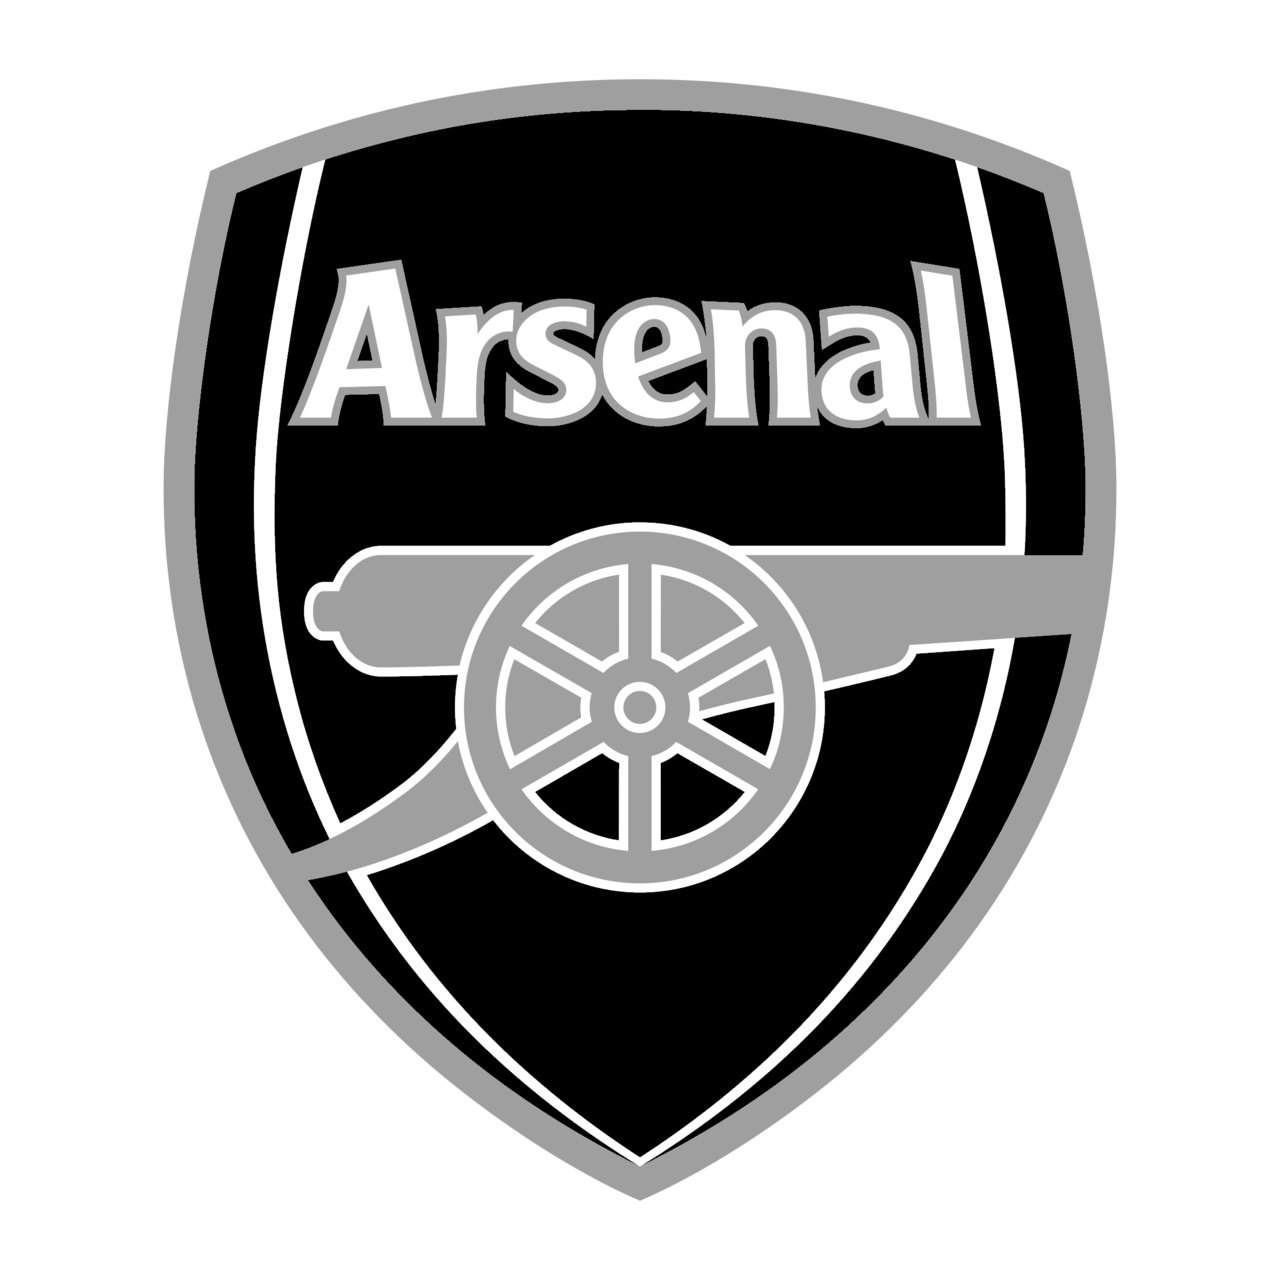 arsenal-logo-black-and-white-1